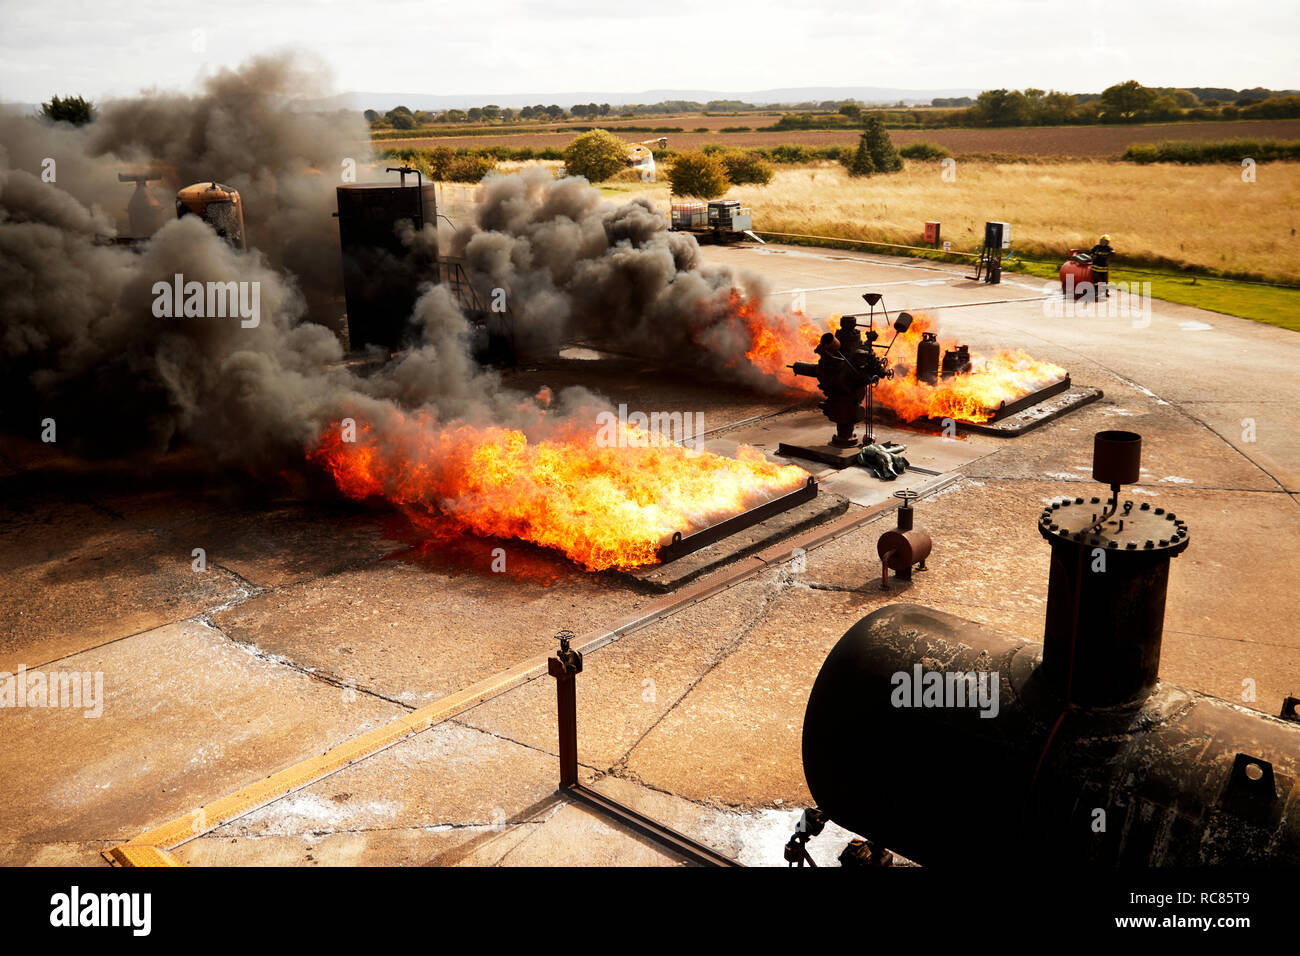 Firemen training, burning fires and smoke at training facility Stock Photo